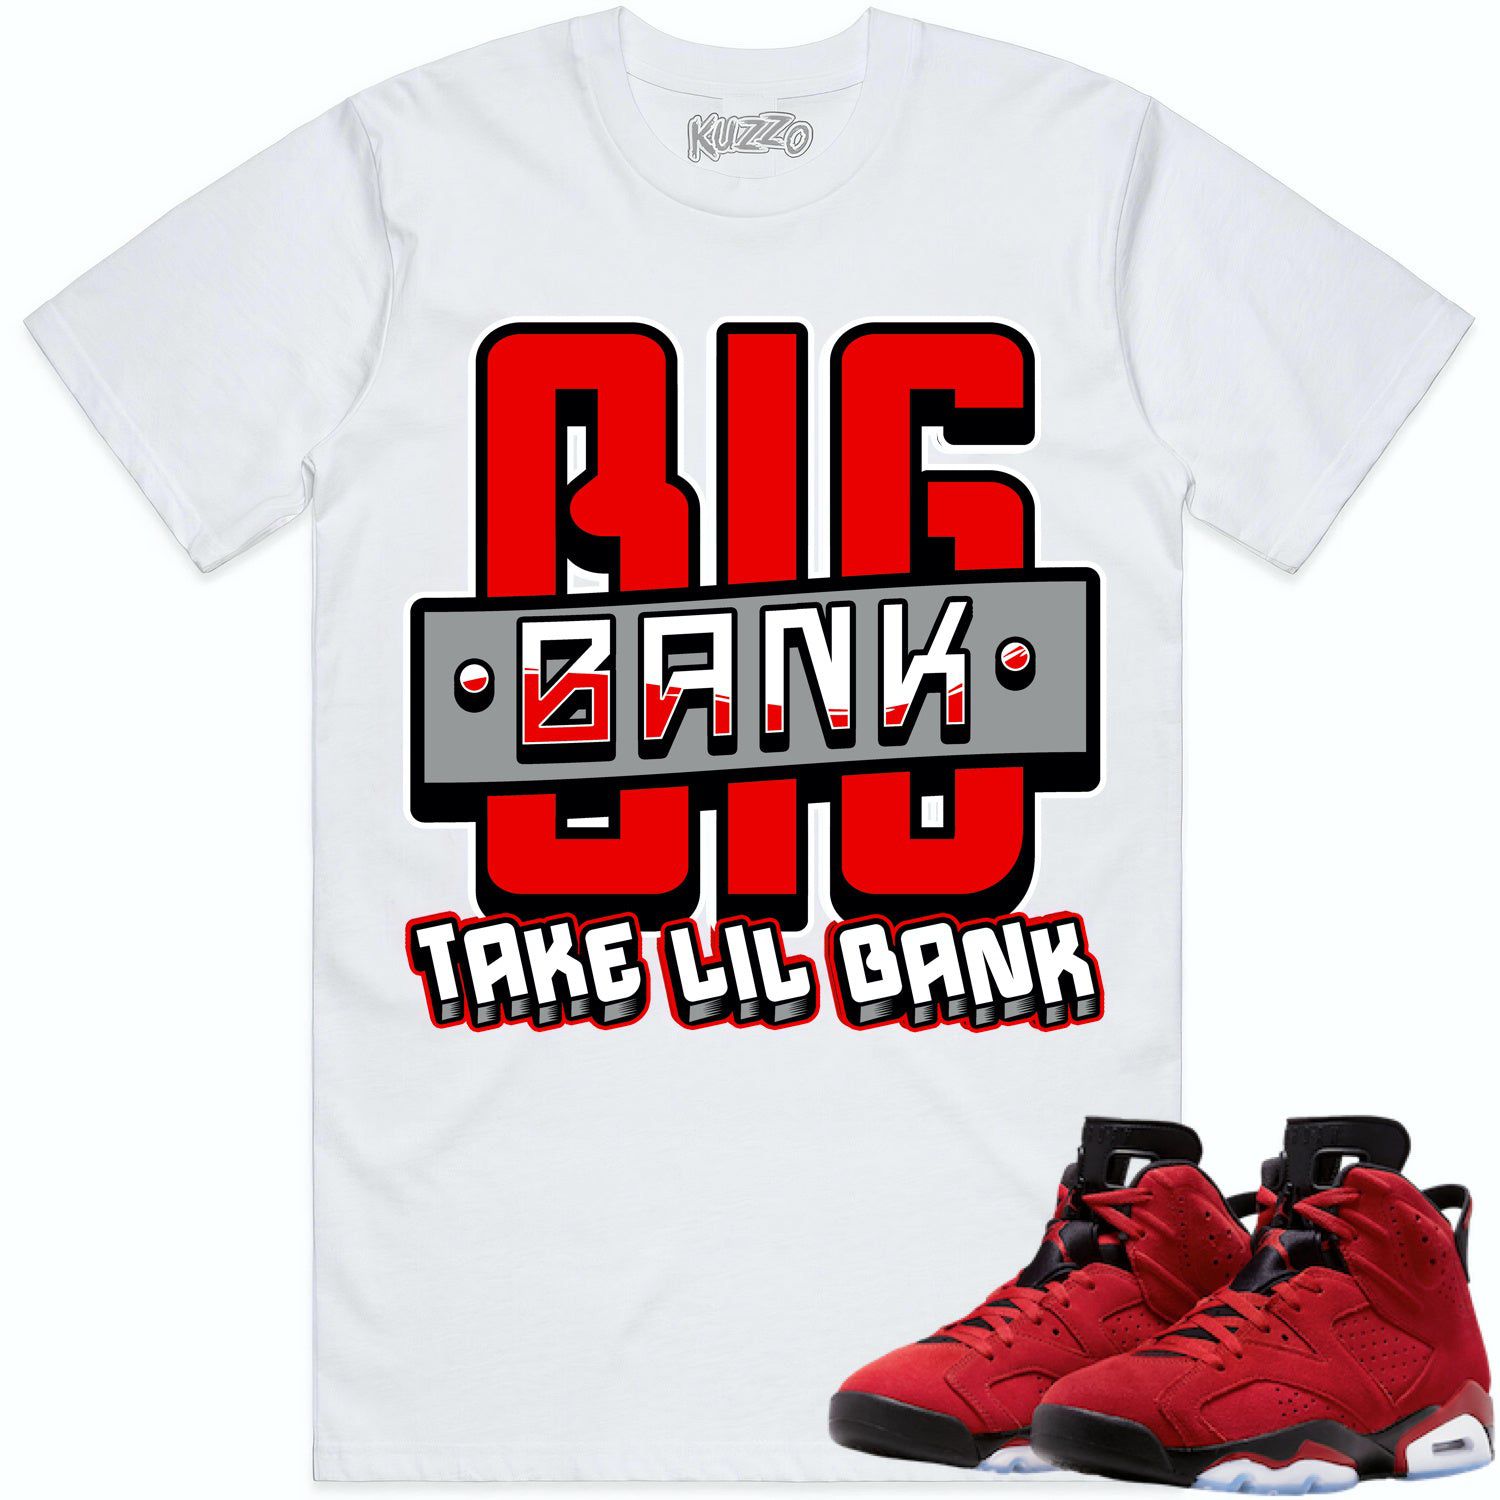 Toro Bravo 6s Shirt - Jordan Retro 6 Toro Bravo Shirts - Red Big Bank